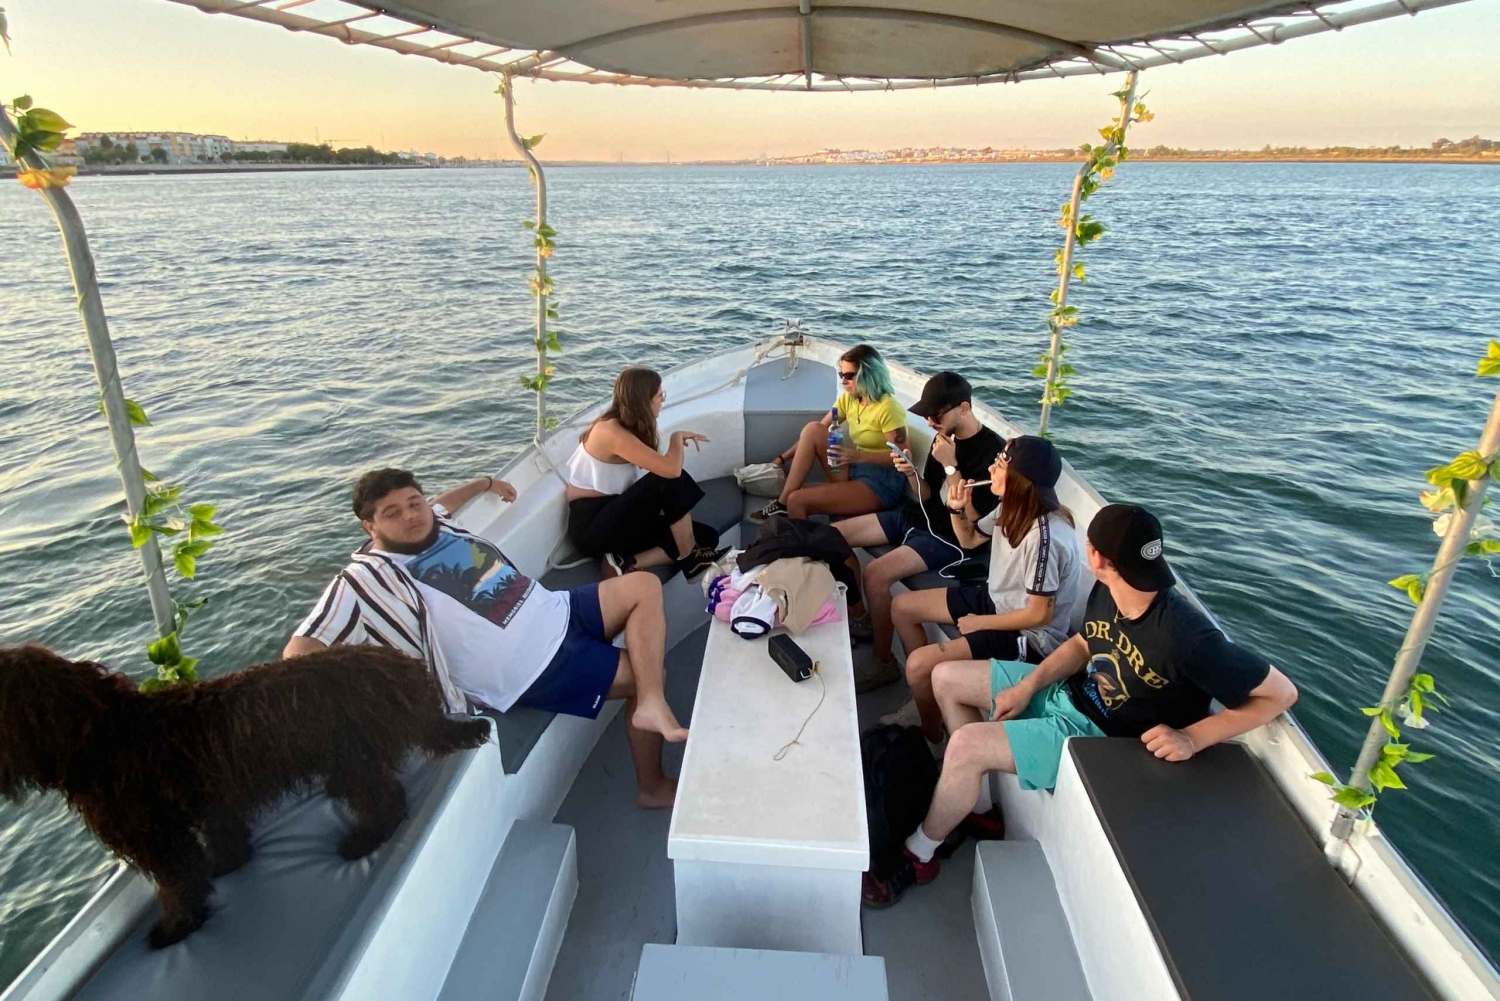 Sunset Boat Trip